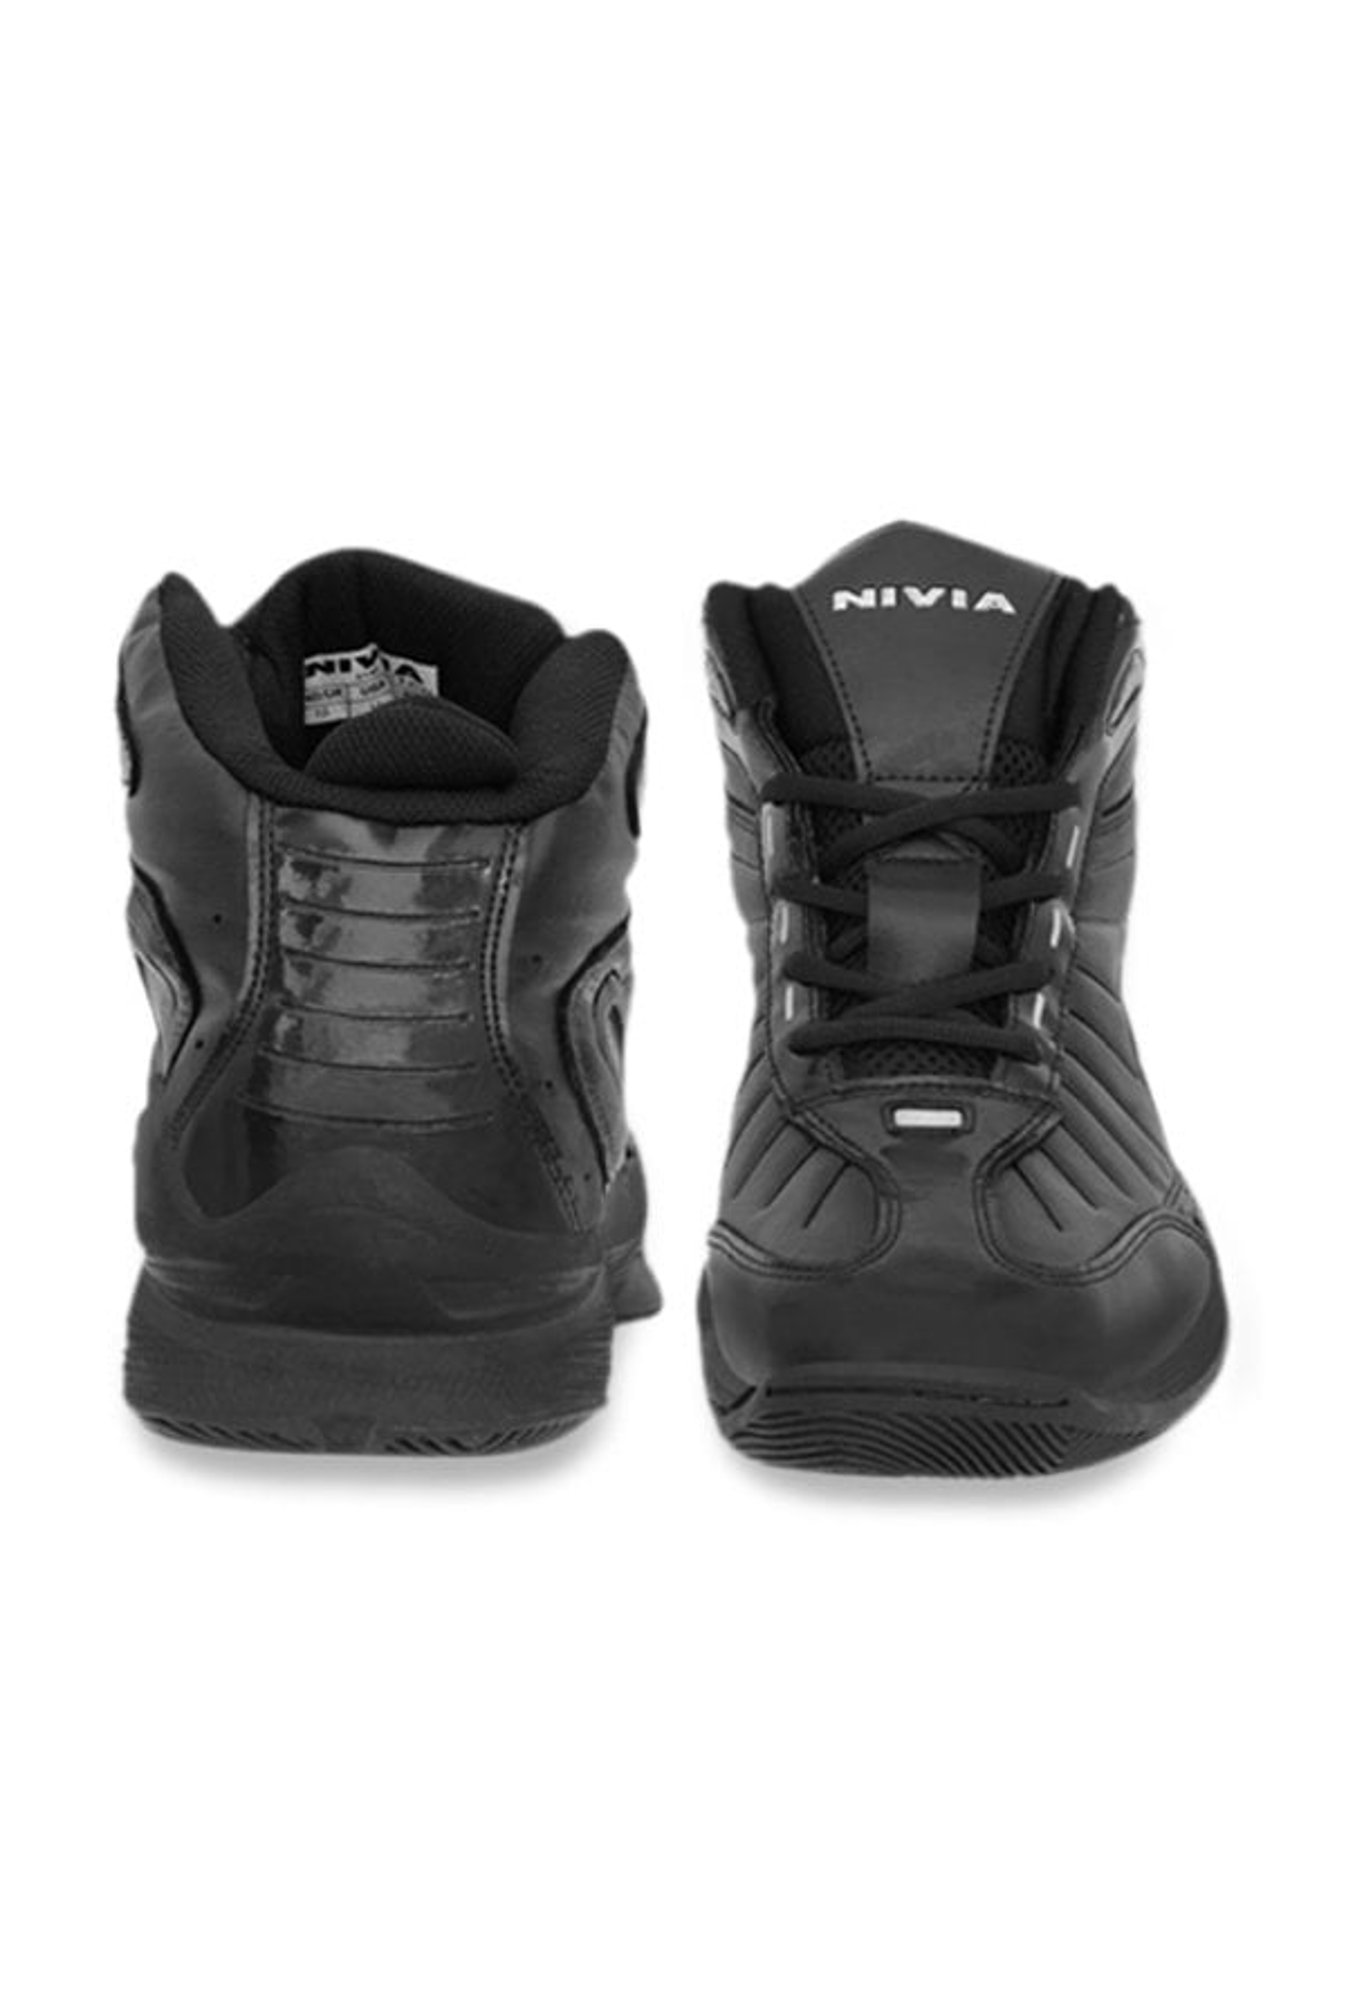 nivia combat 1 basketball shoes